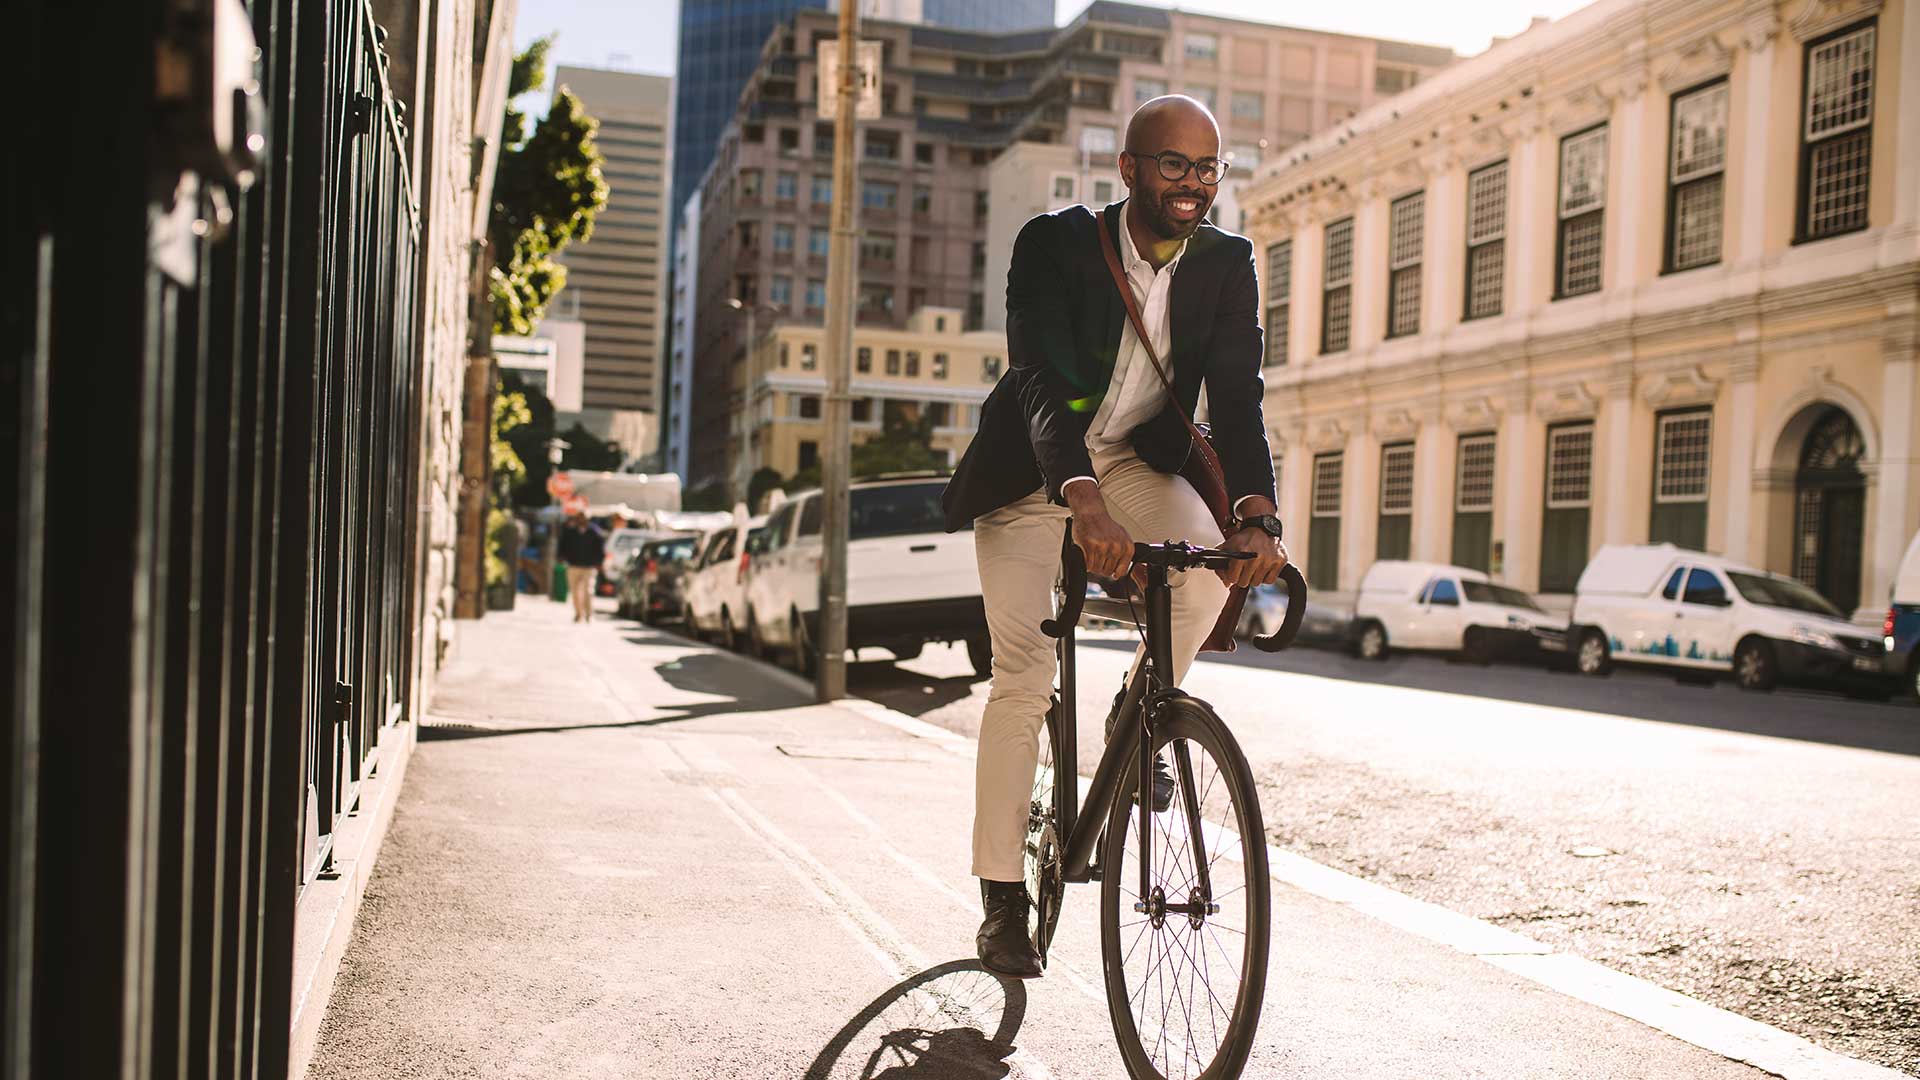 A man riding a bicycle down a city street.